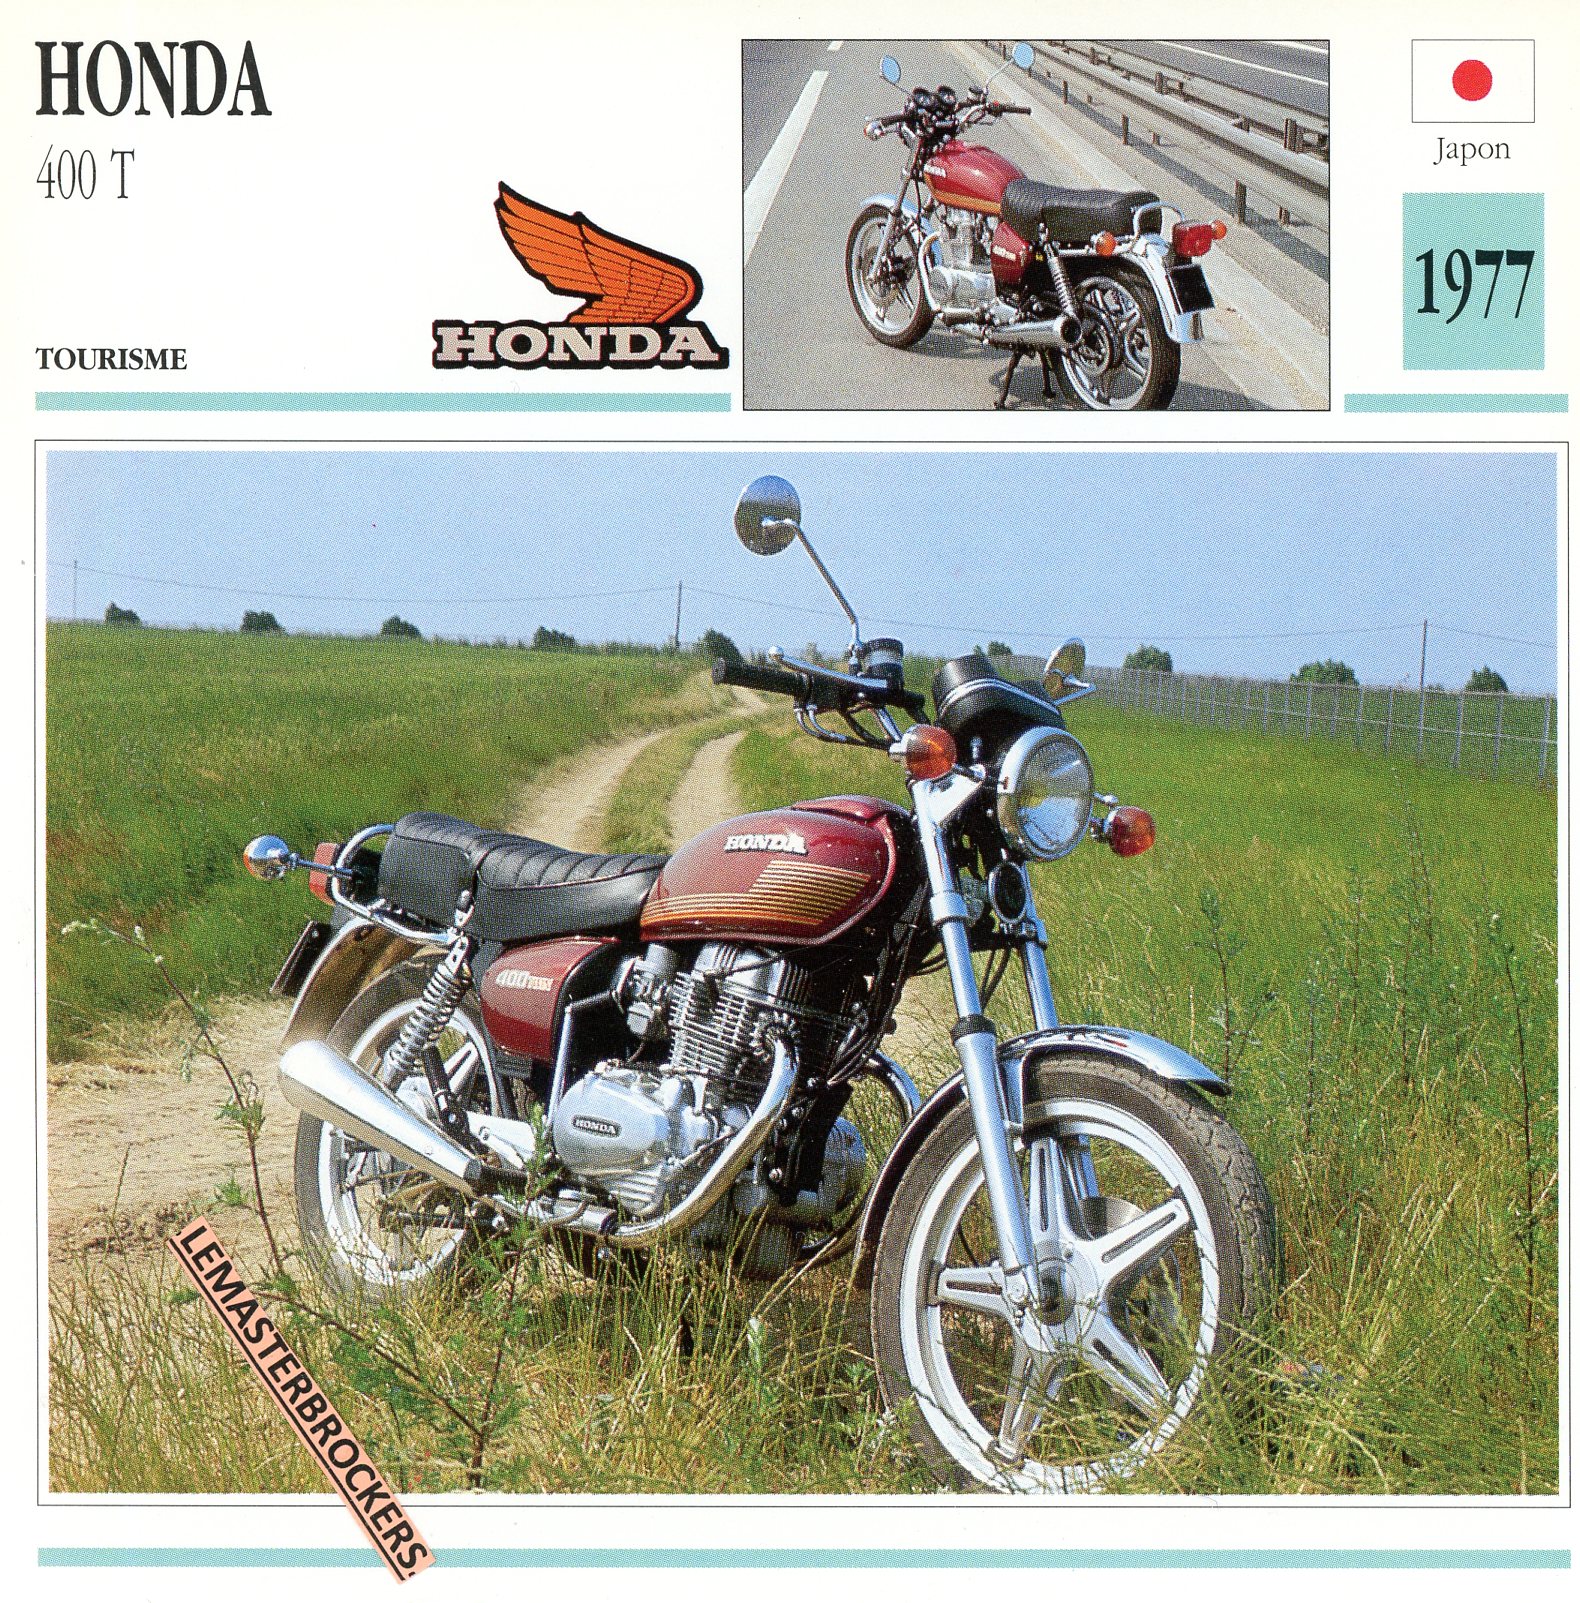 FICHE-MOTO-HONDA-400T-1977-LEMASTERBROCKERS-CARS-MOTORCYCLE